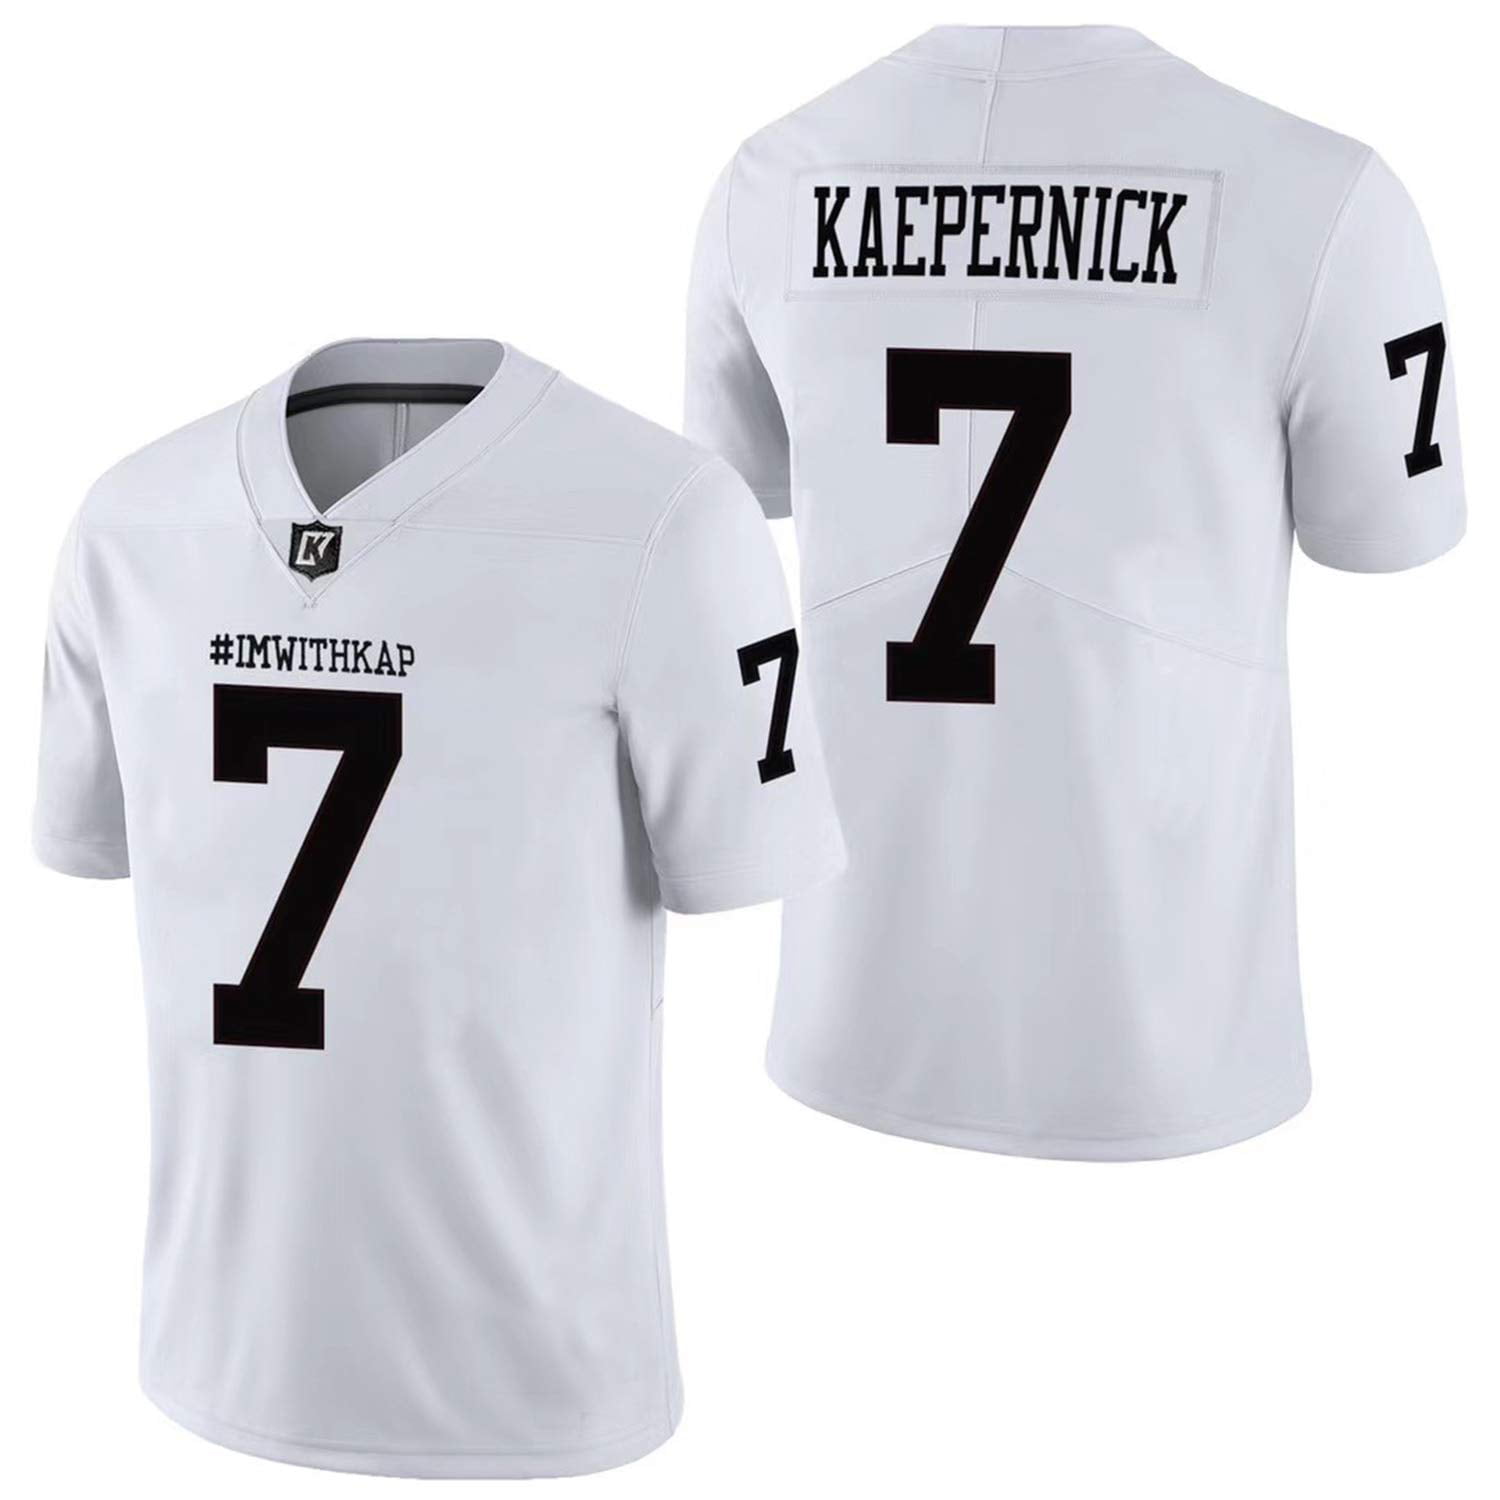 Villa #ImWithKap Colin Kaepernick Jersey 7 IM with KAP Football Jersey All Stitched Men Black White Movie Jerseys S-3XL 